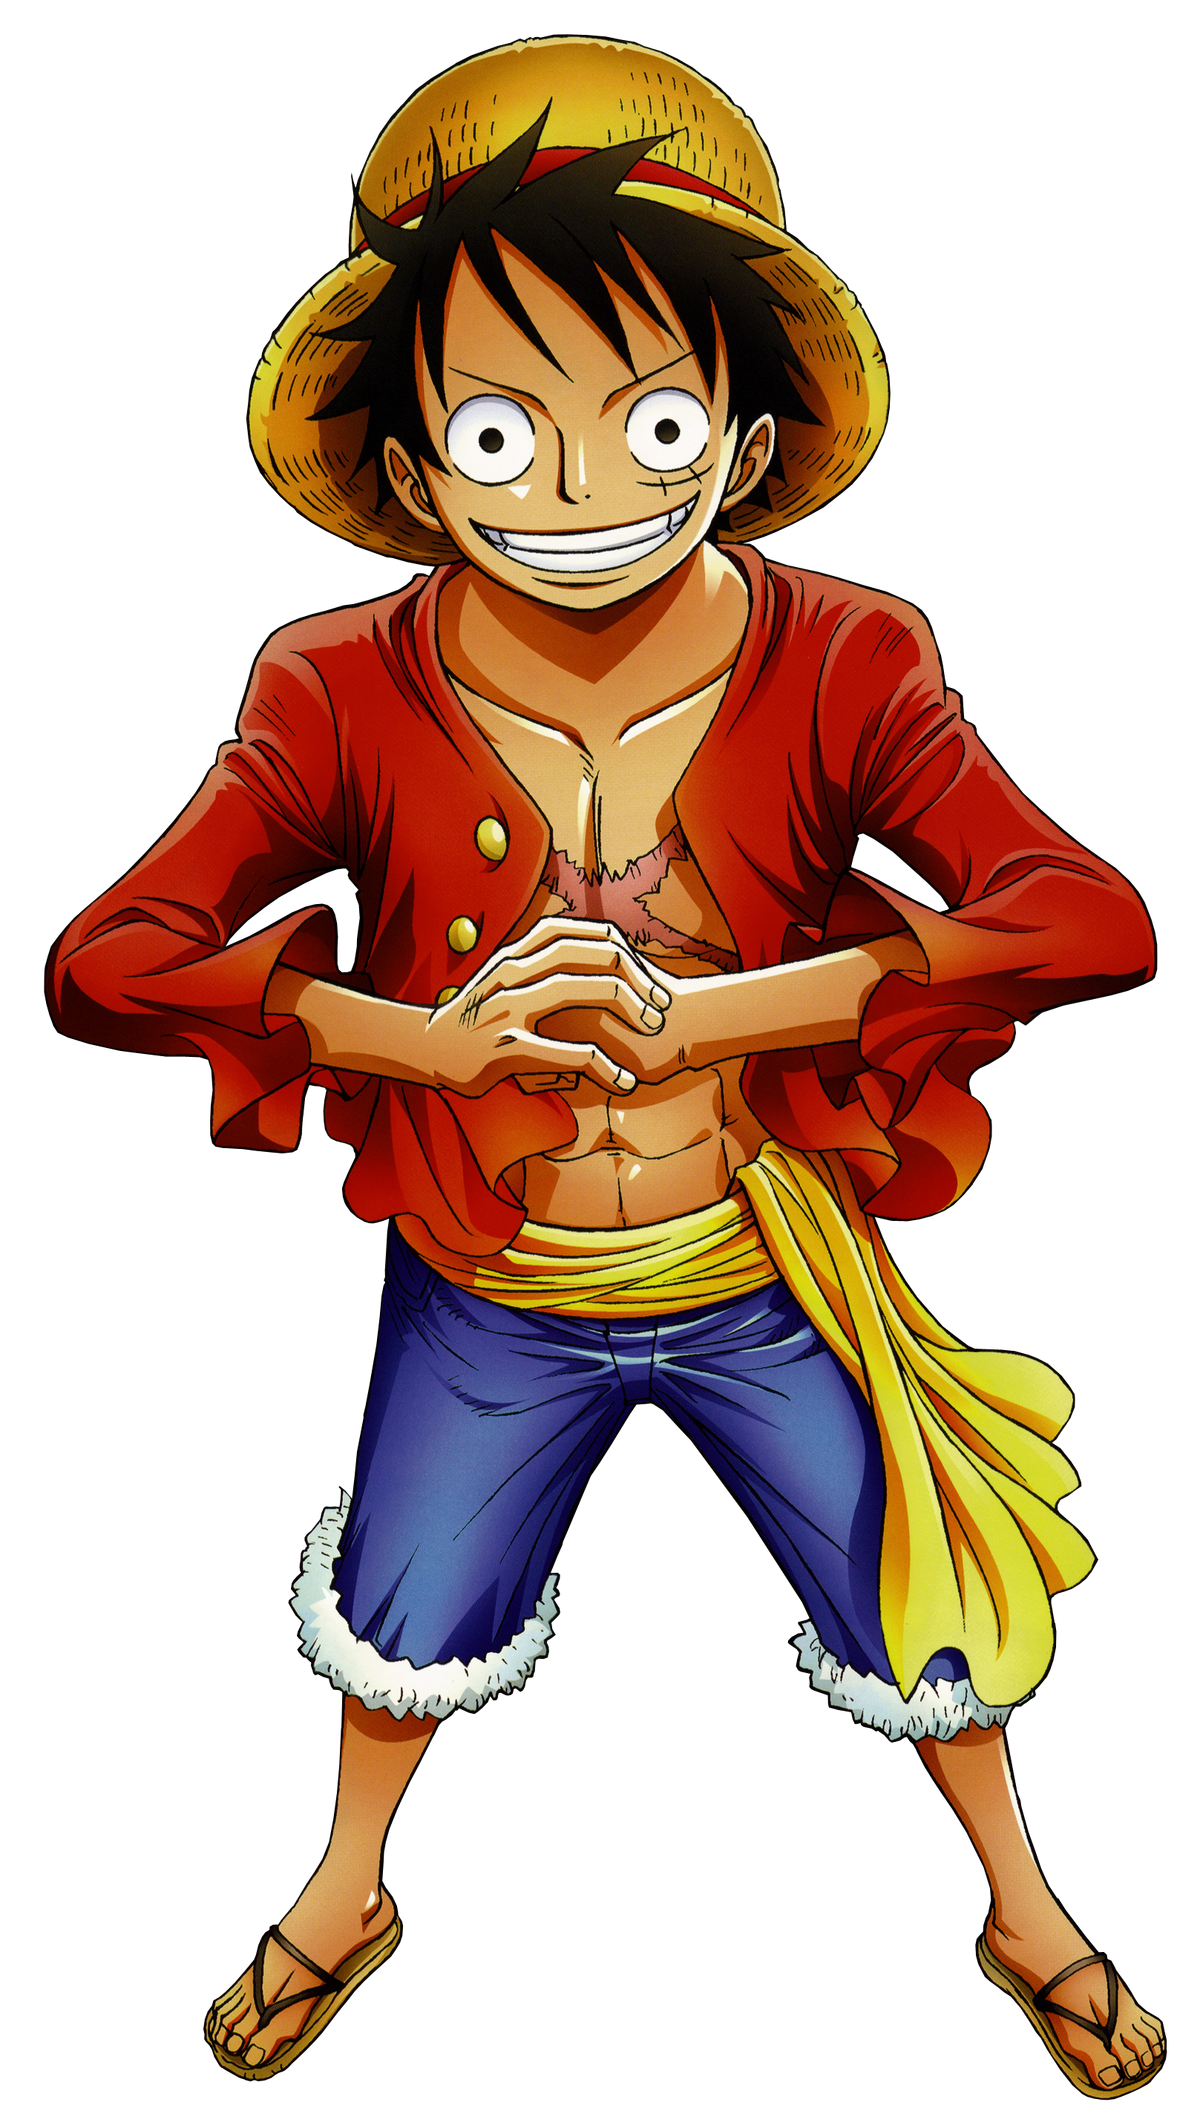 Portgas D. Ace Monkey D. Luffy One Piece: Burning Blood Vinsmoke Sanji  Monkey D. Garp, one piece, fictional Character, cartoon, one Piece png